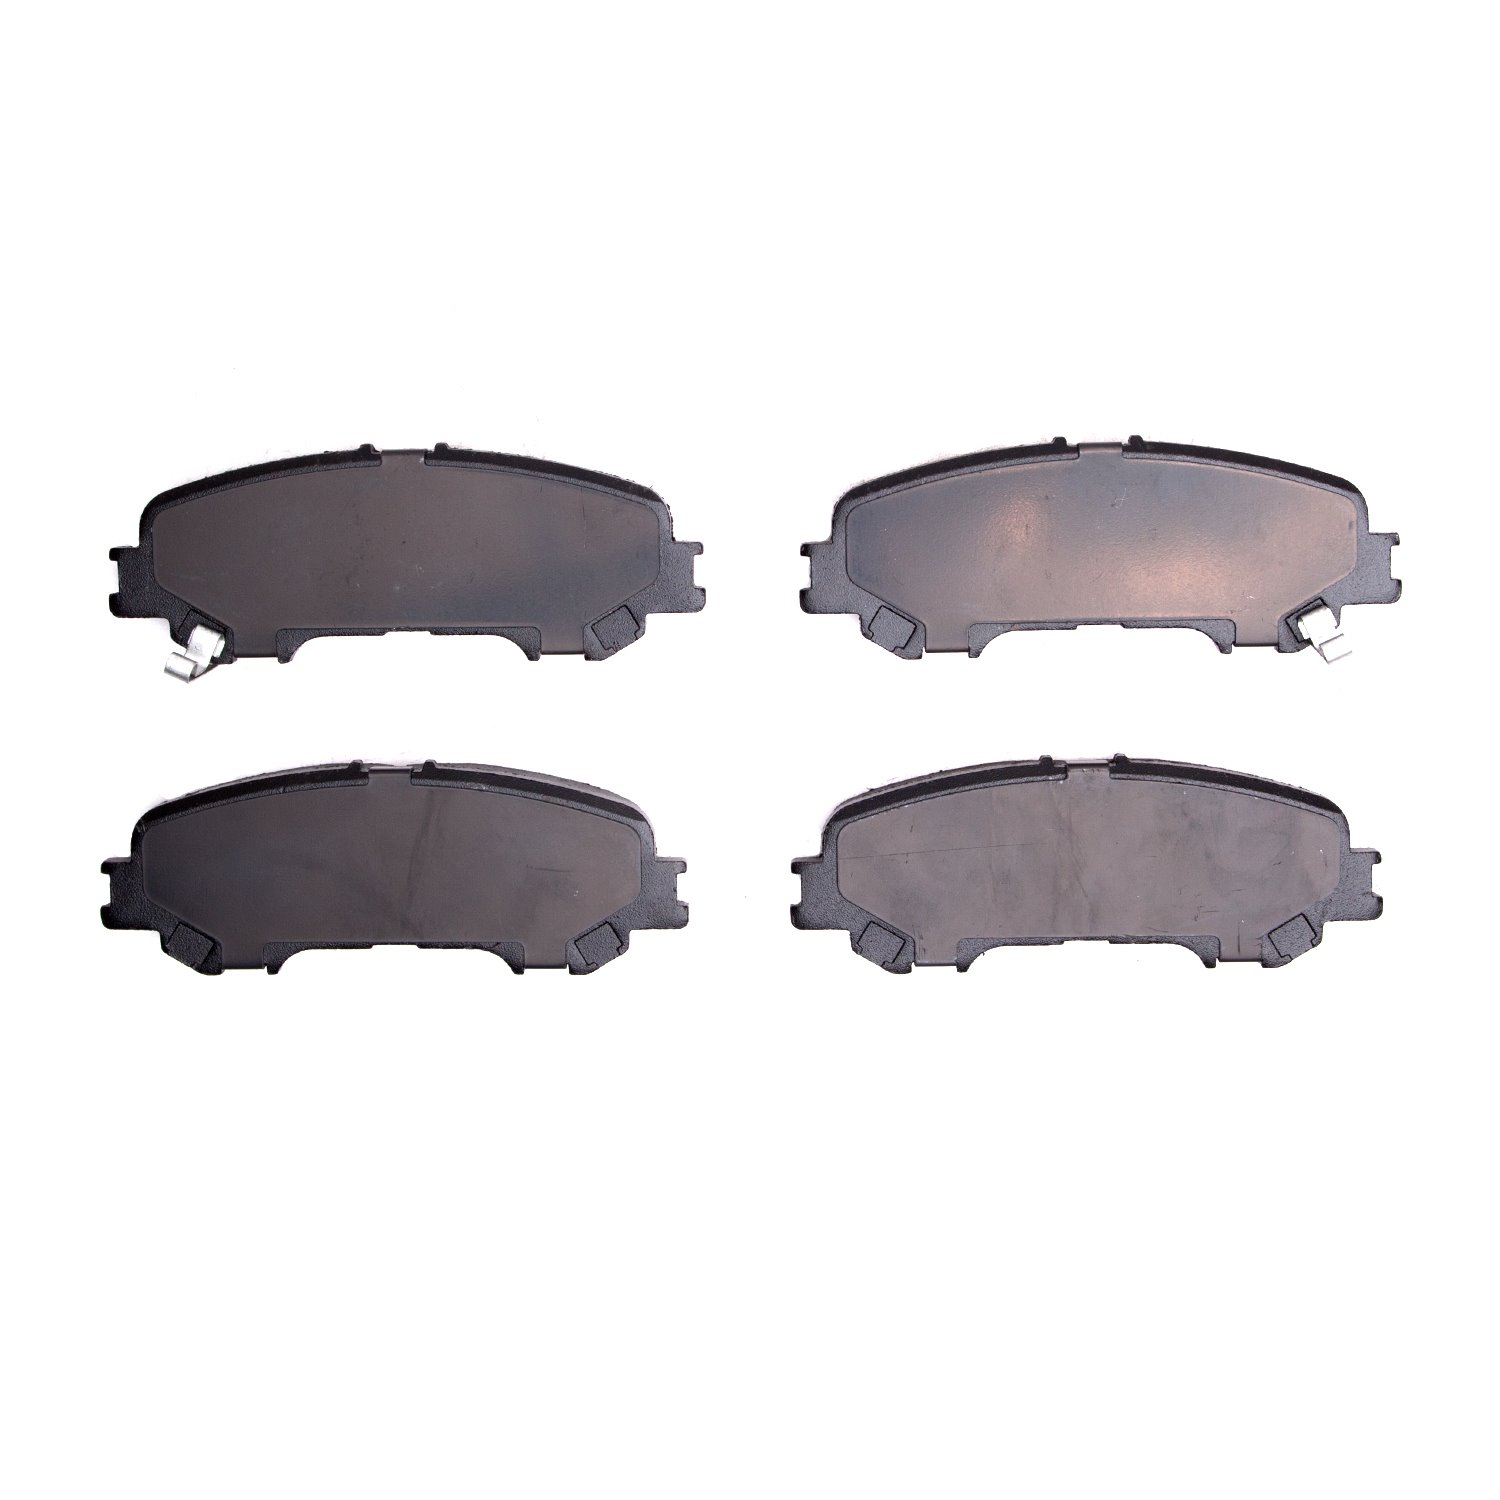 1310-2032-00 3000-Series Ceramic Brake Pads, Fits Select Infiniti/Nissan, Position: Rear